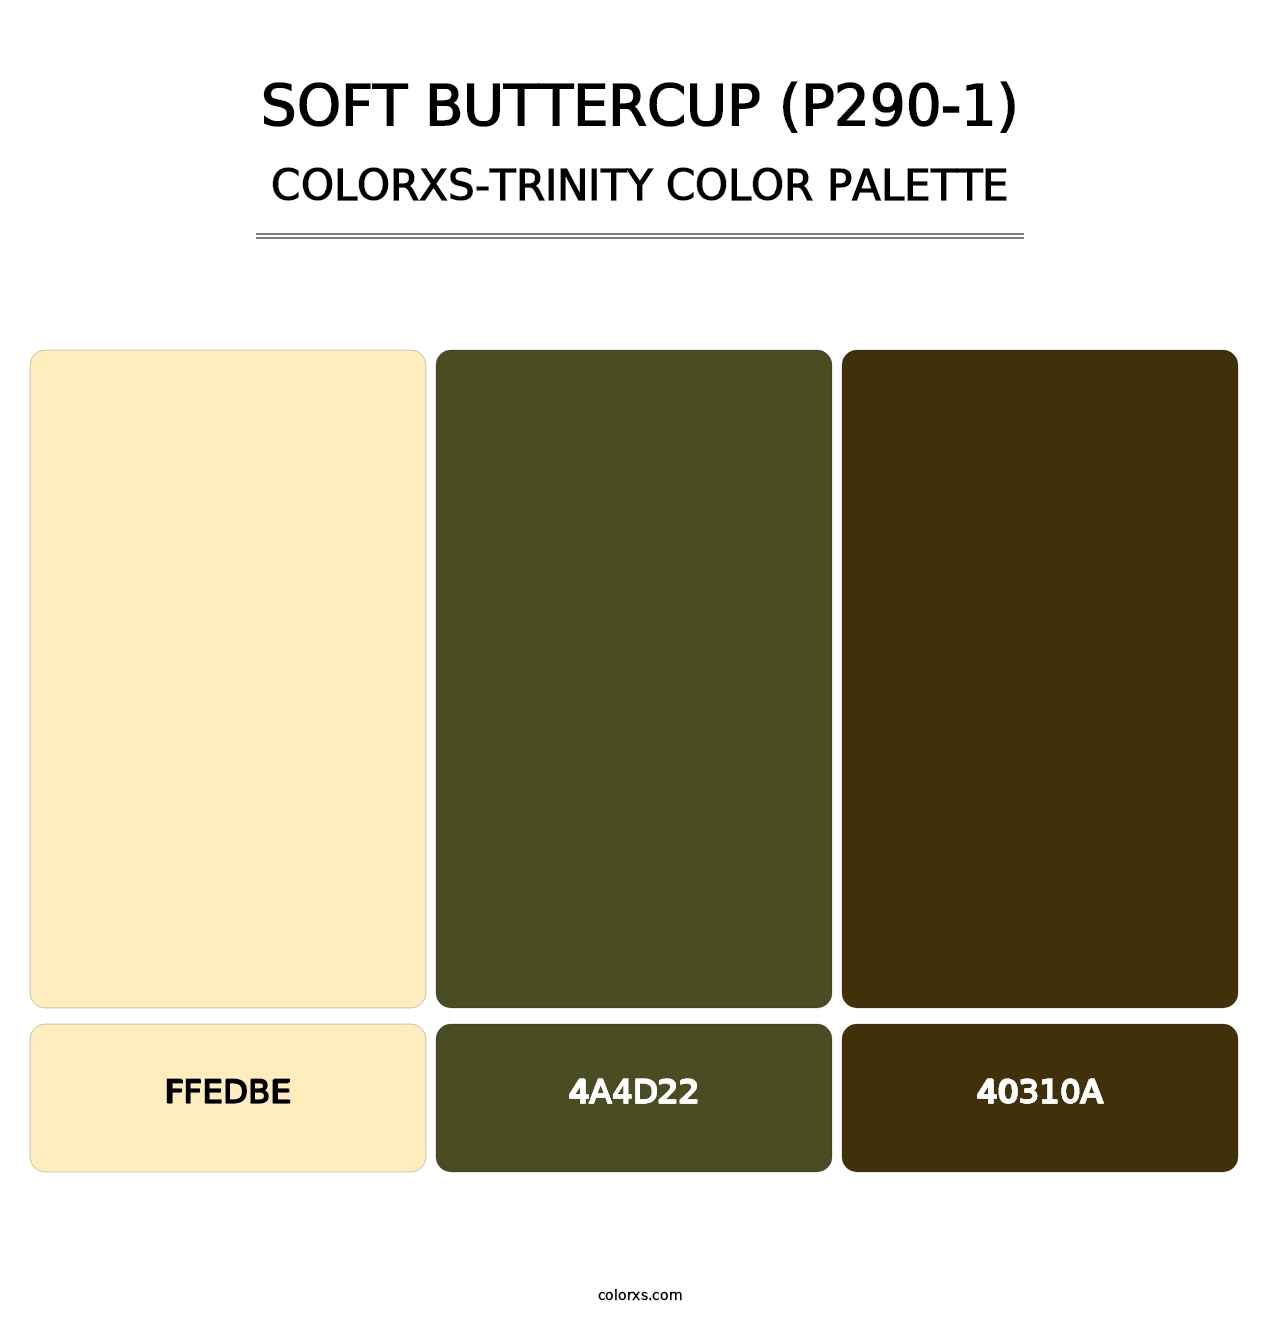 Soft Buttercup (P290-1) - Colorxs Trinity Palette